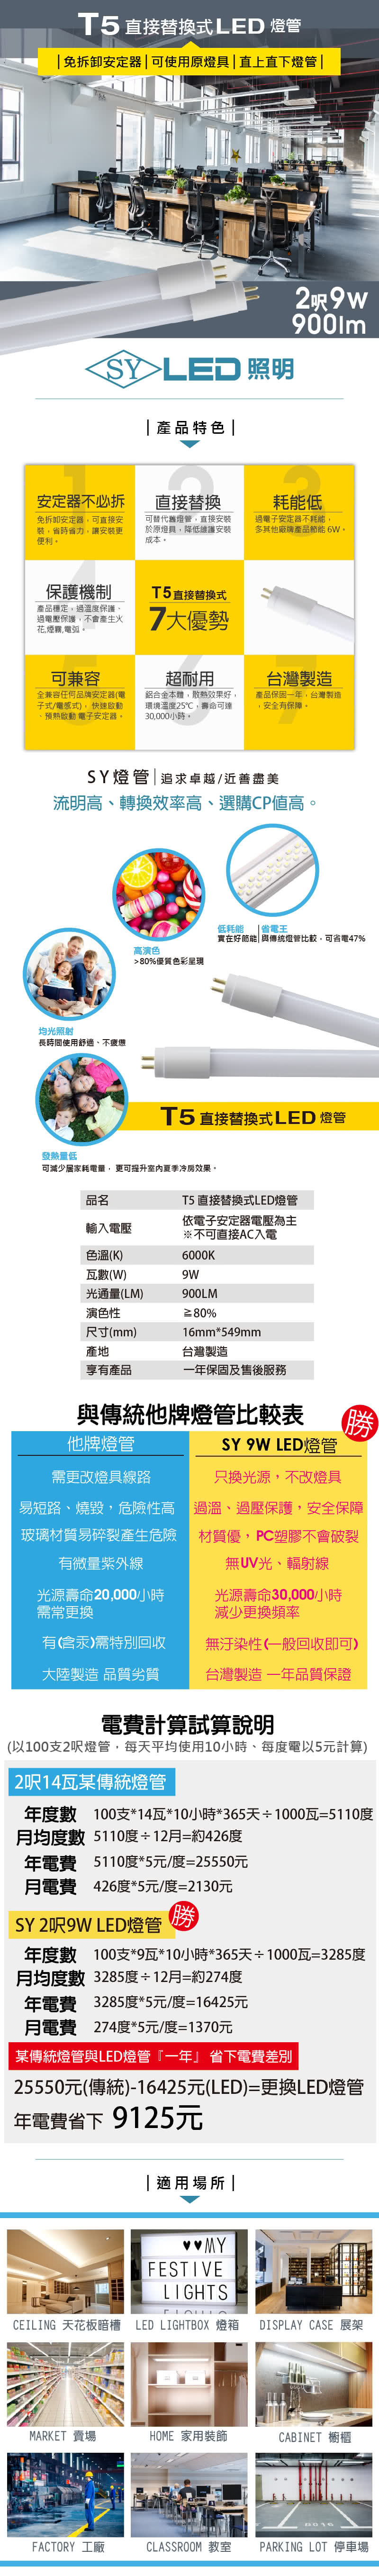 SY-LED-T5-2-9W.jpg